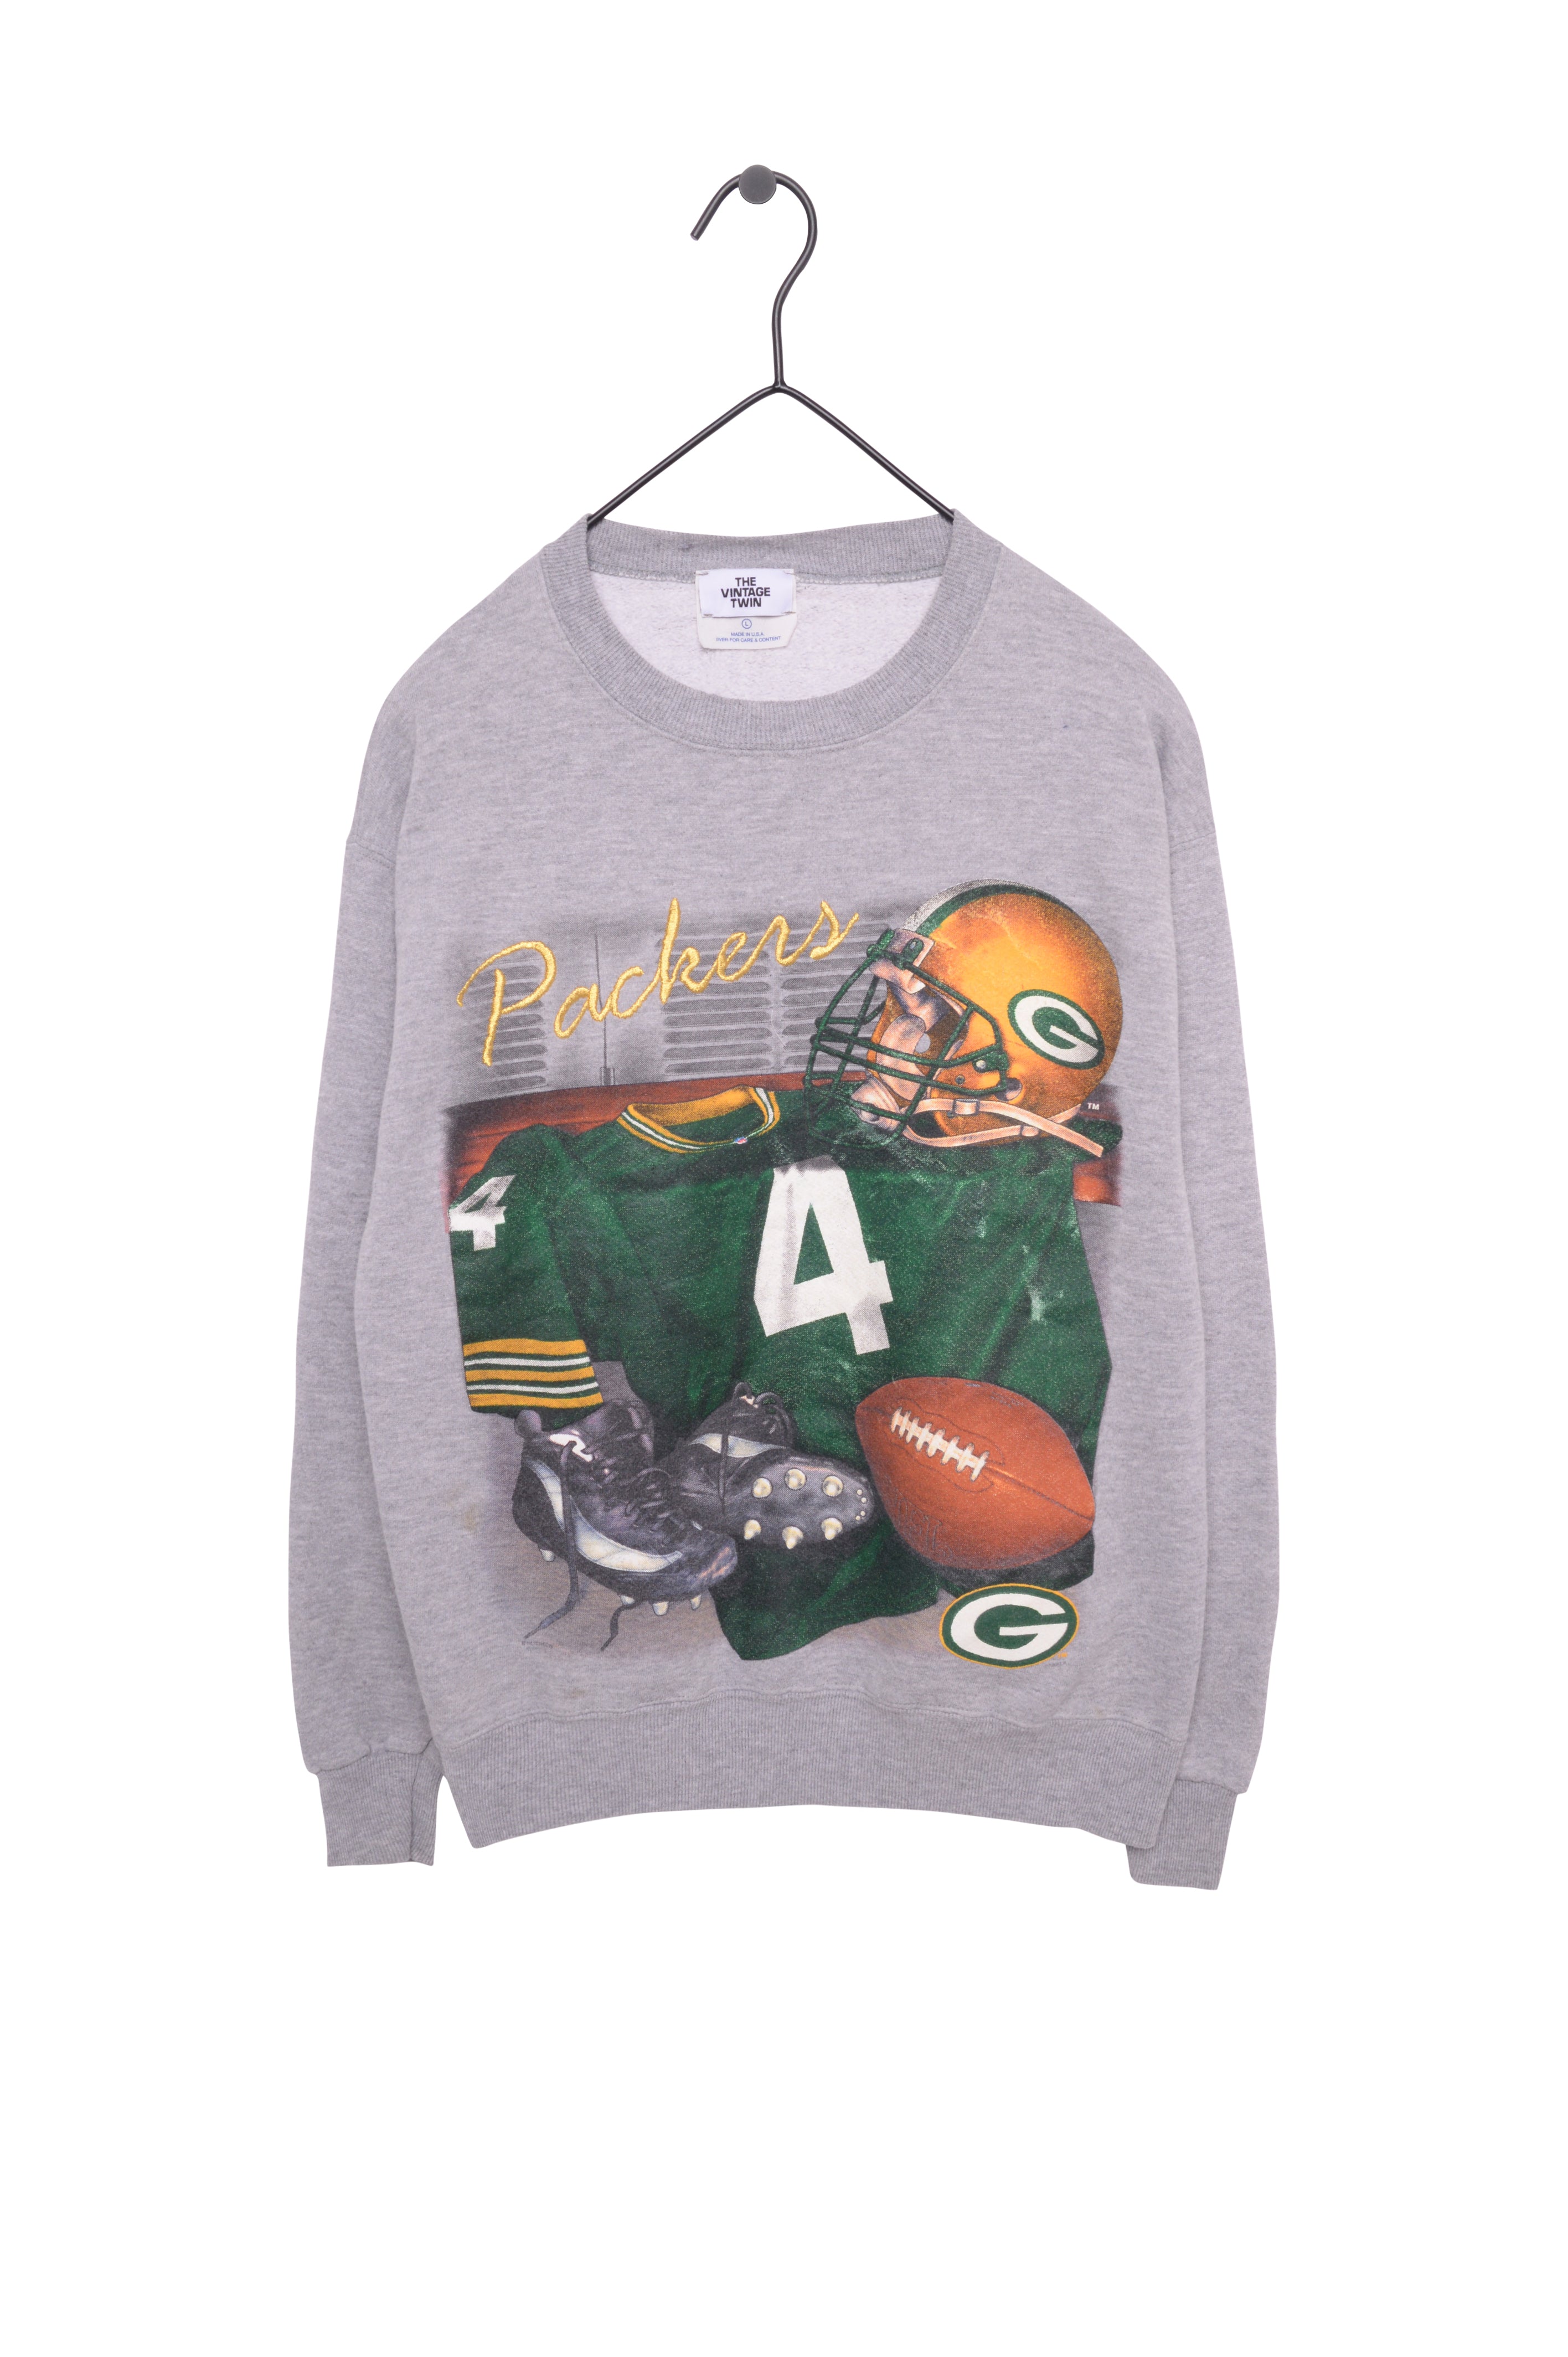 Unisex Vintage Green Bay Packers Sweatshirt USA - The Vintage Twin